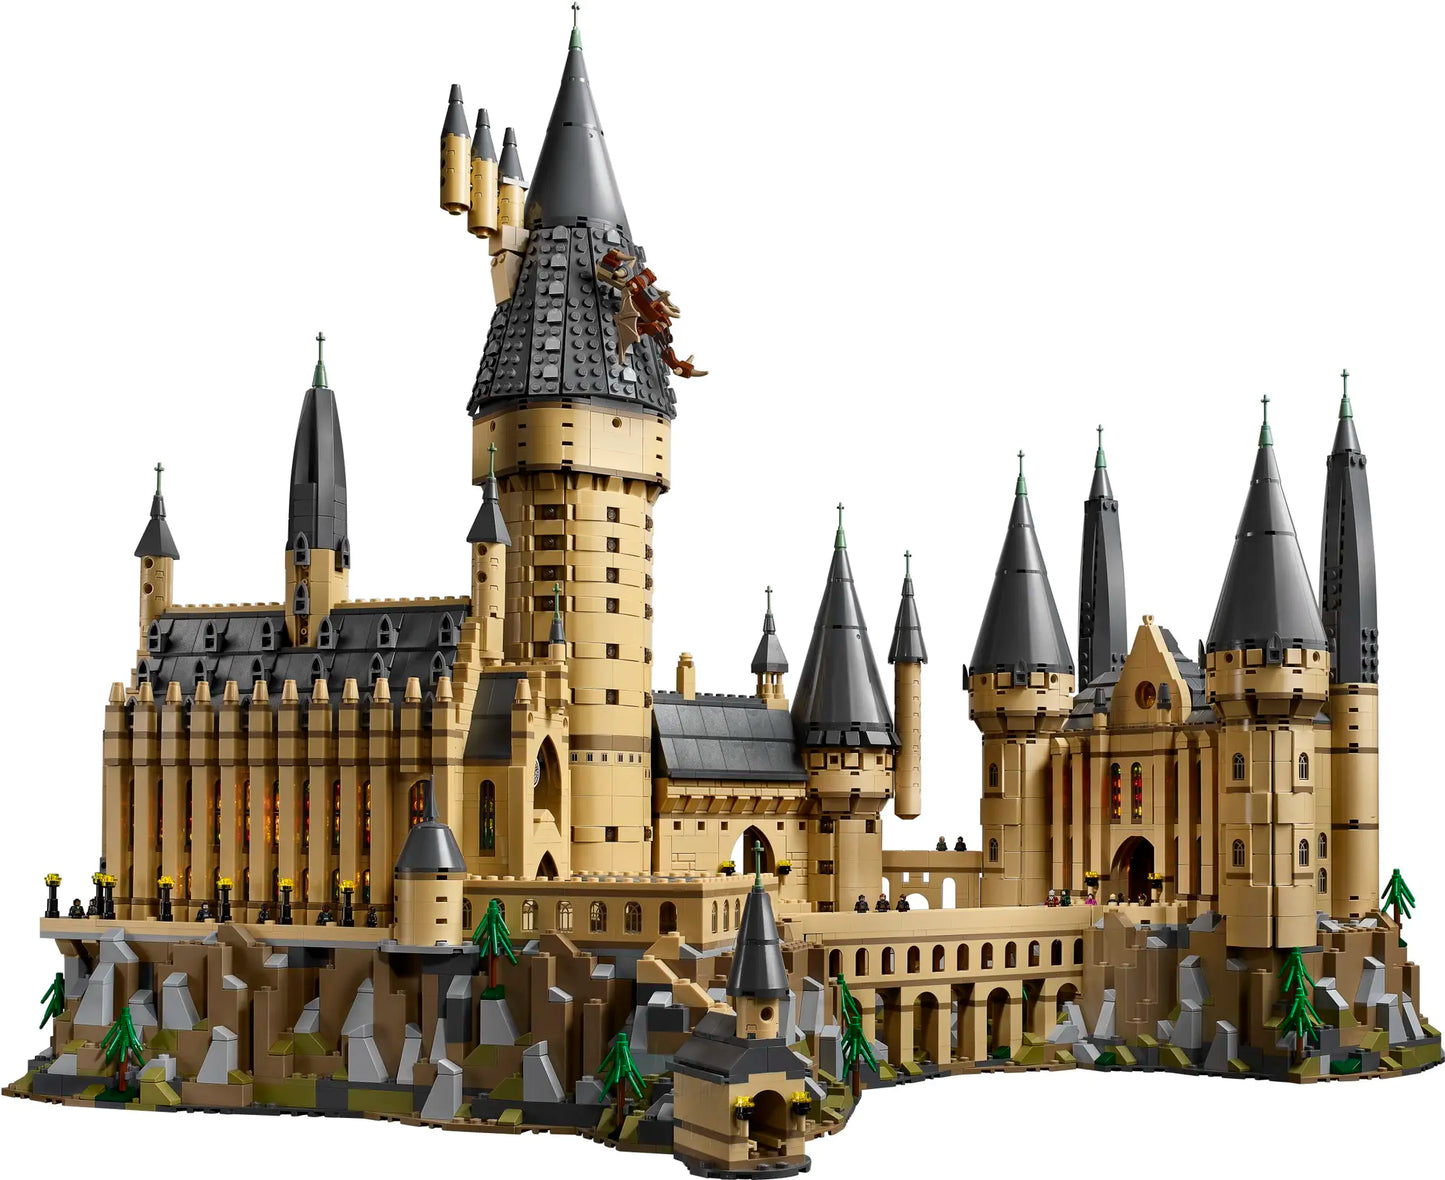 #71043 Hogwarts™ Castle